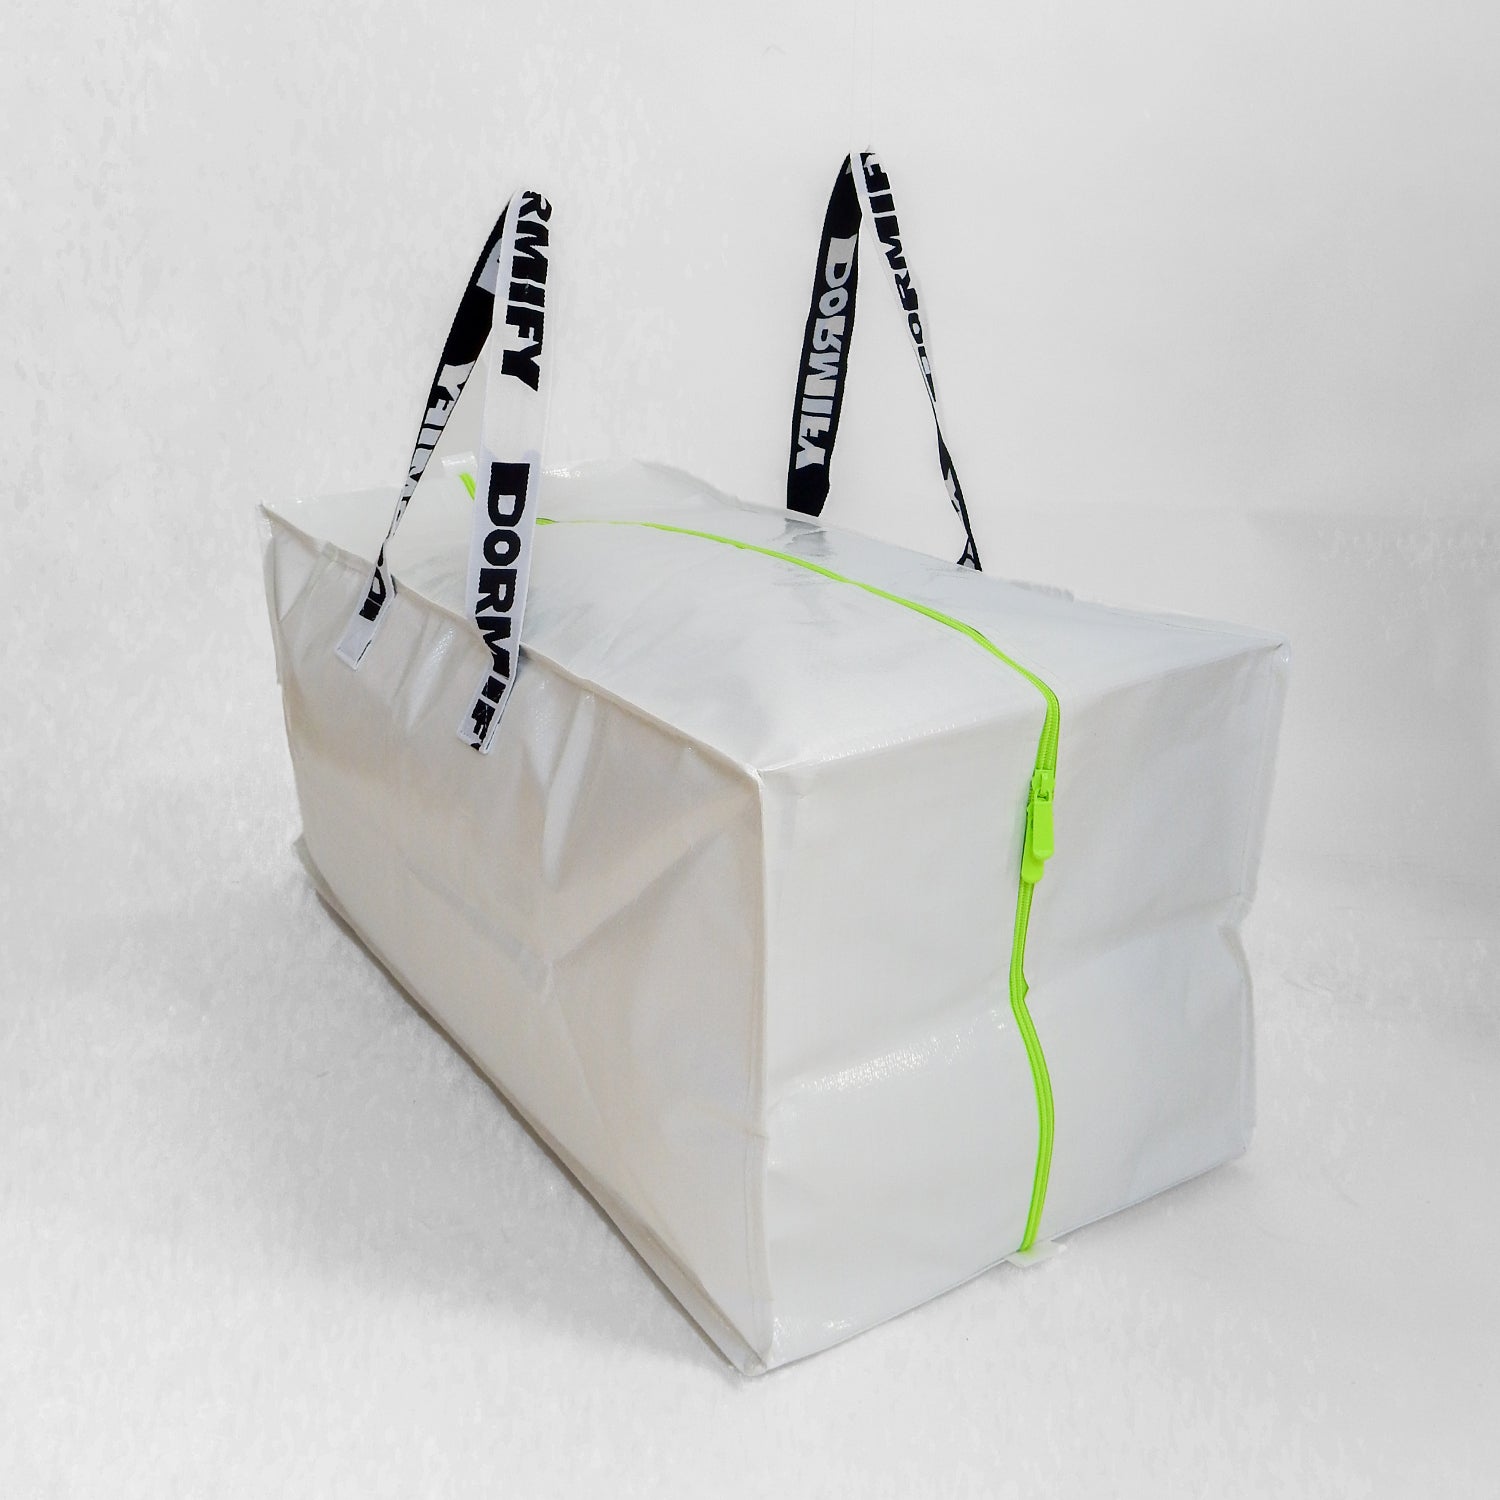 Dormify Storage Duffle Bag | Dorm Essentials - Ikea Bag Alternative - Dormify